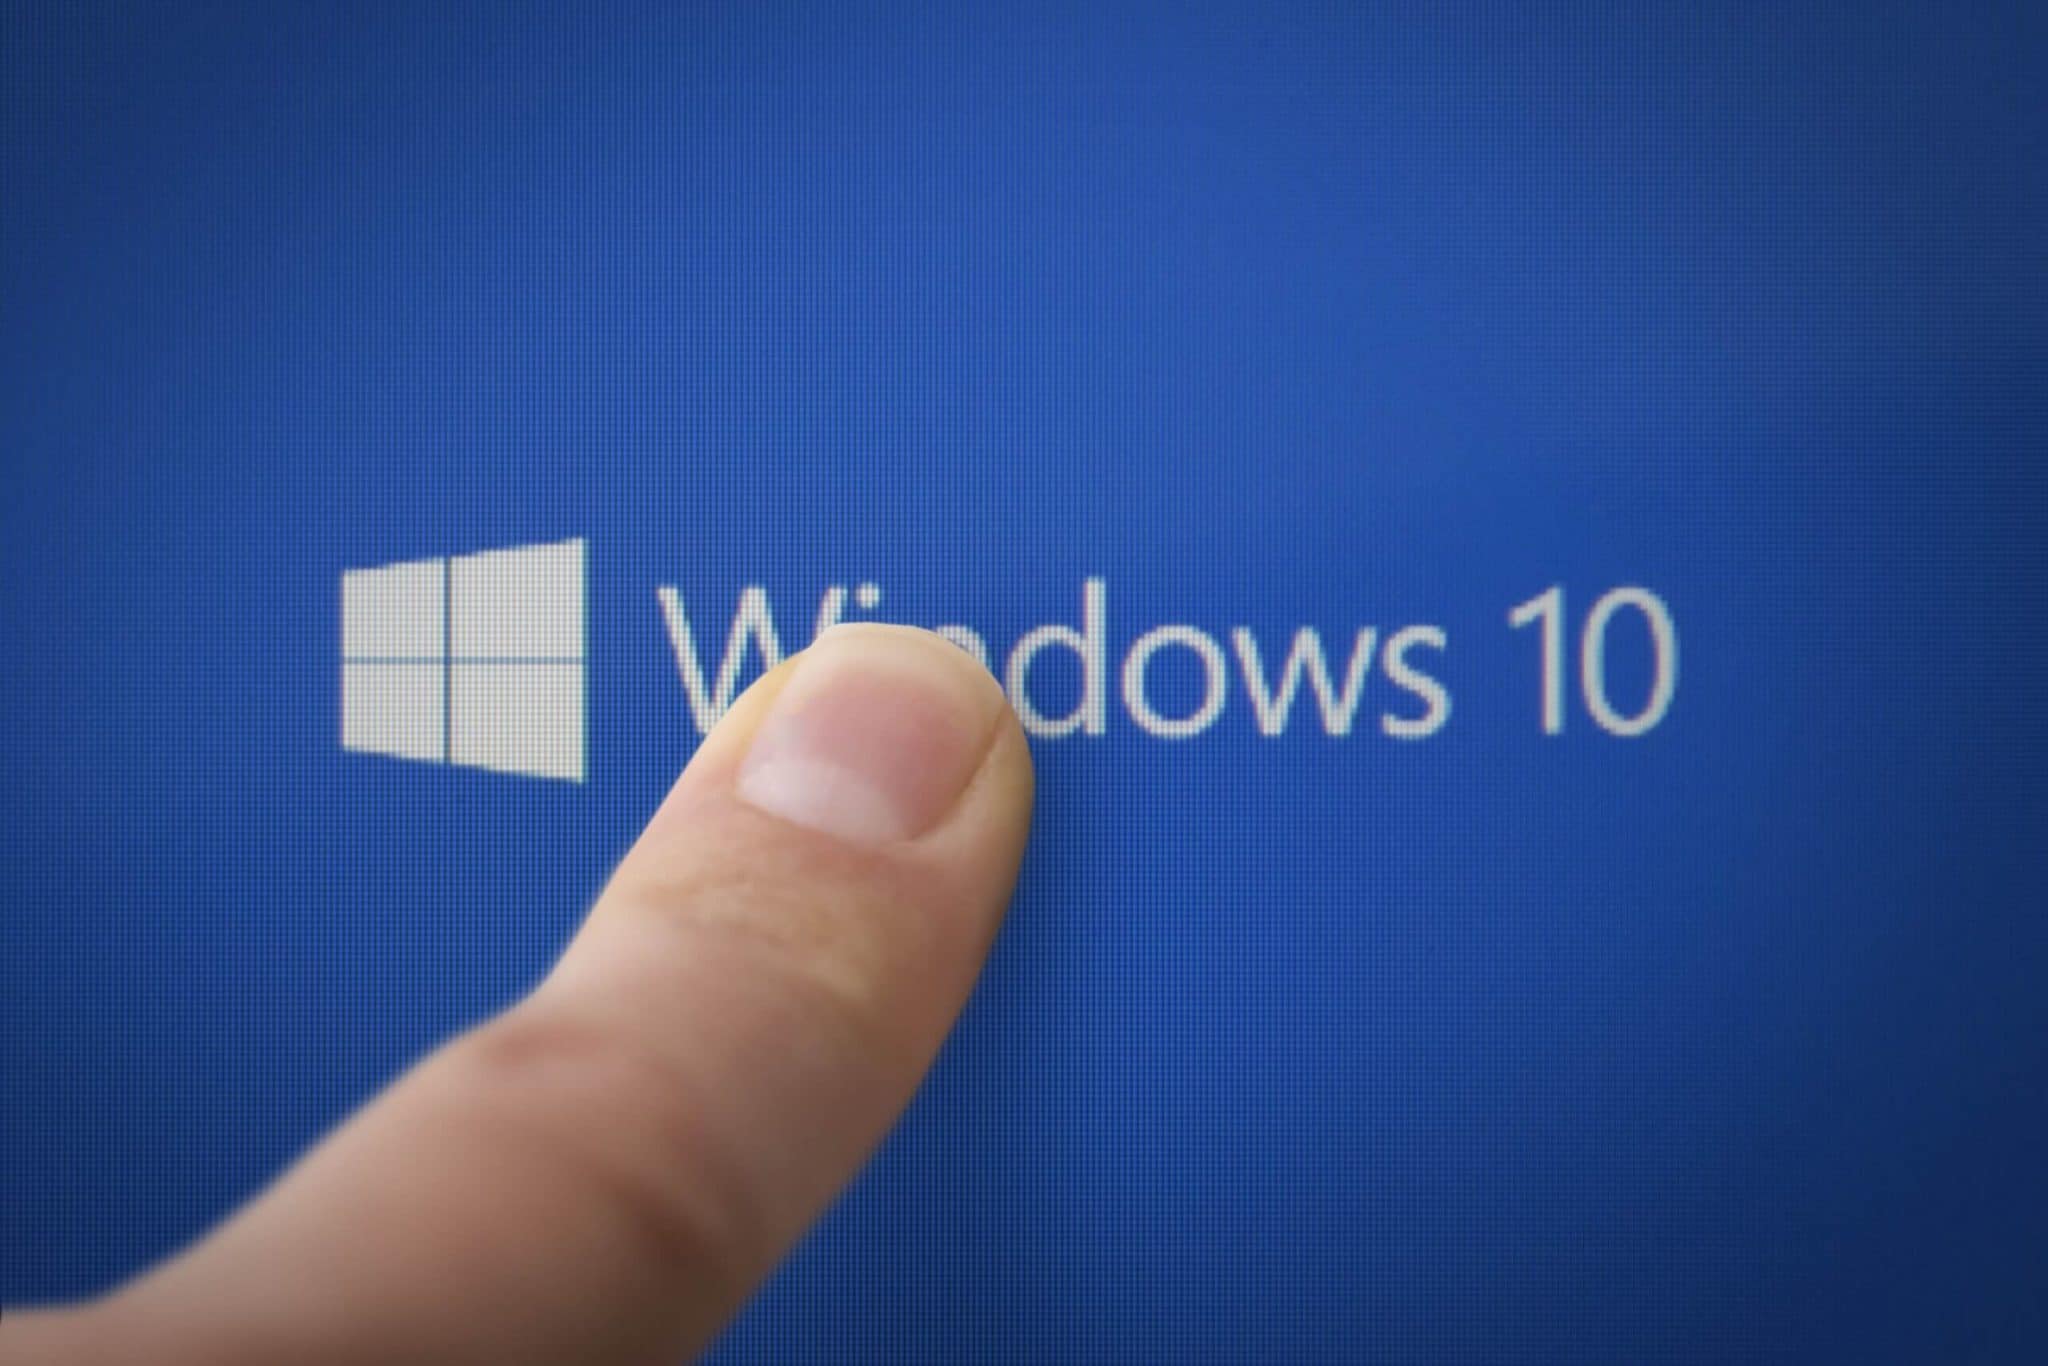 Upgrade Windows 10 For Free